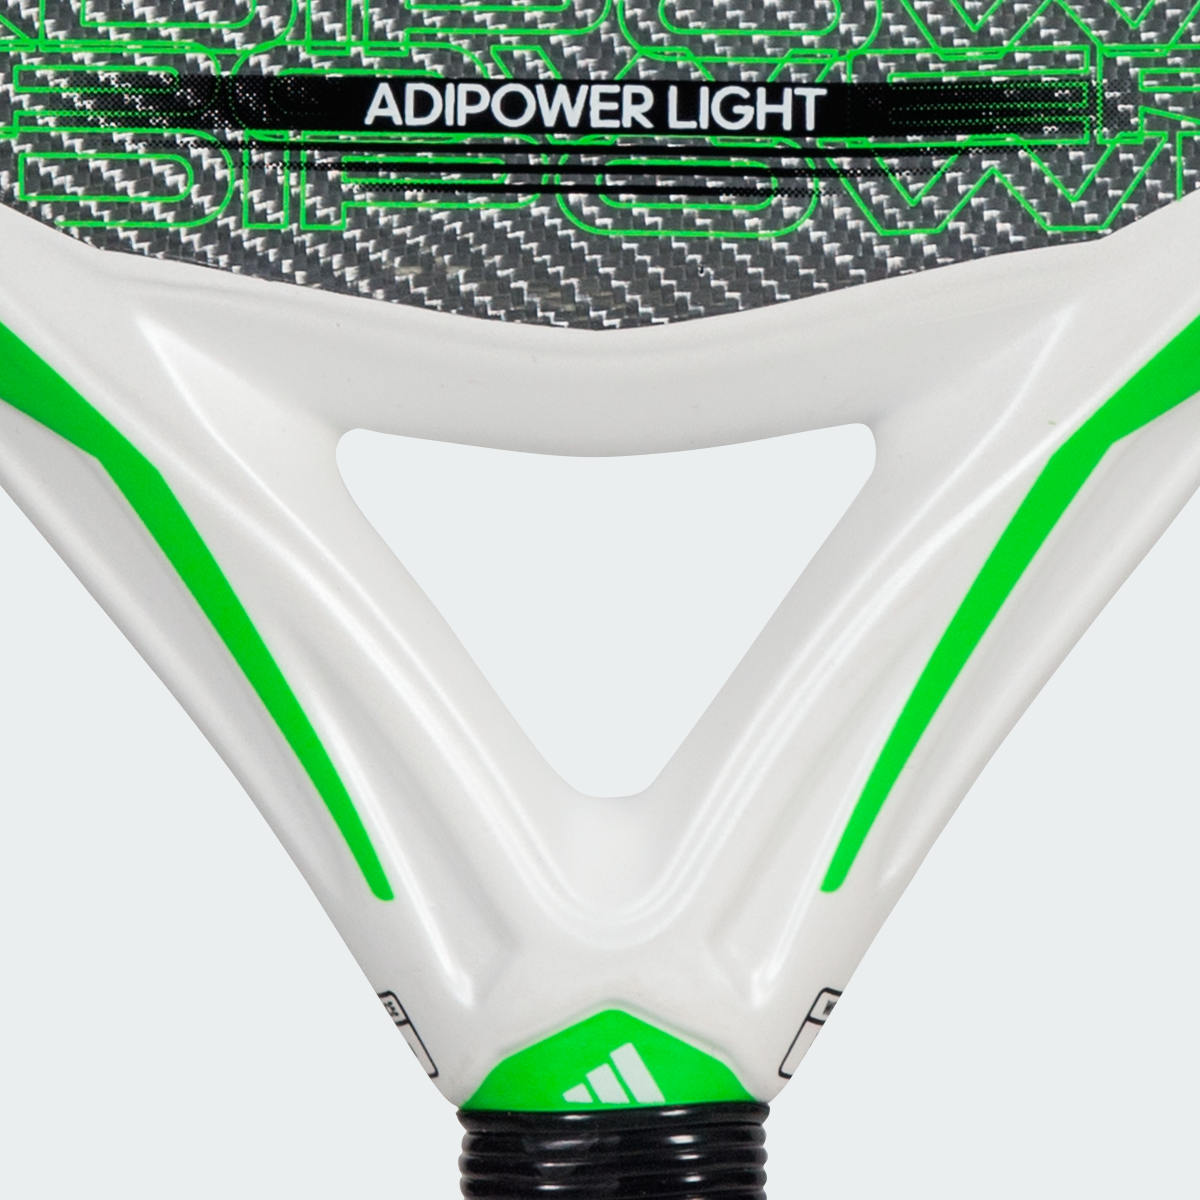 Adidas Raquete de Padel Adipower Light 3.3. 5